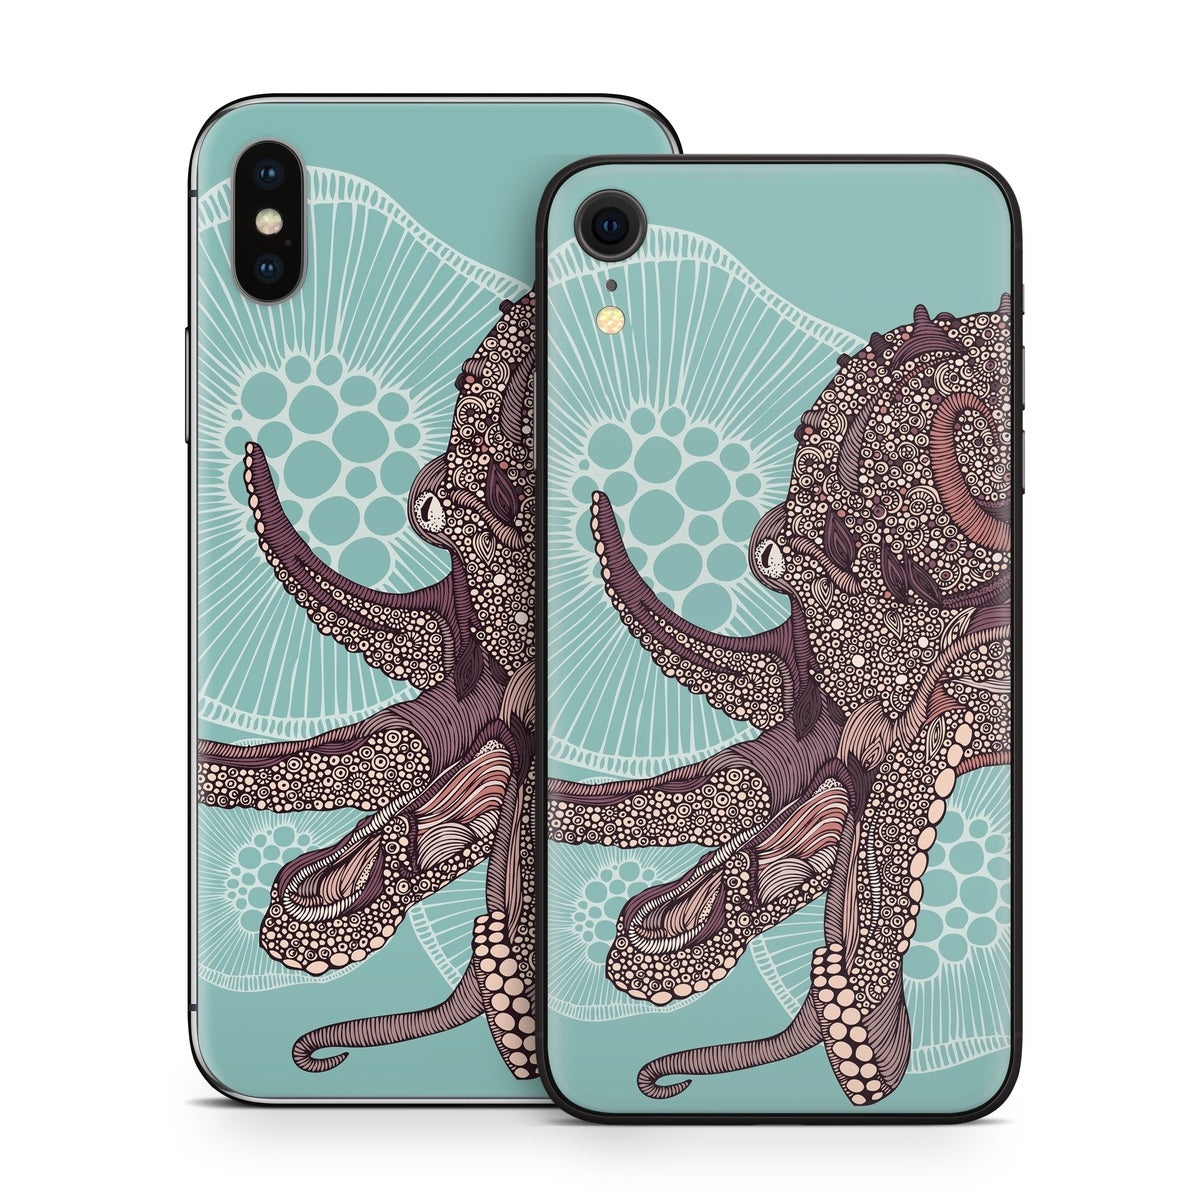 Octopus Bloom - Apple iPhone X Skin